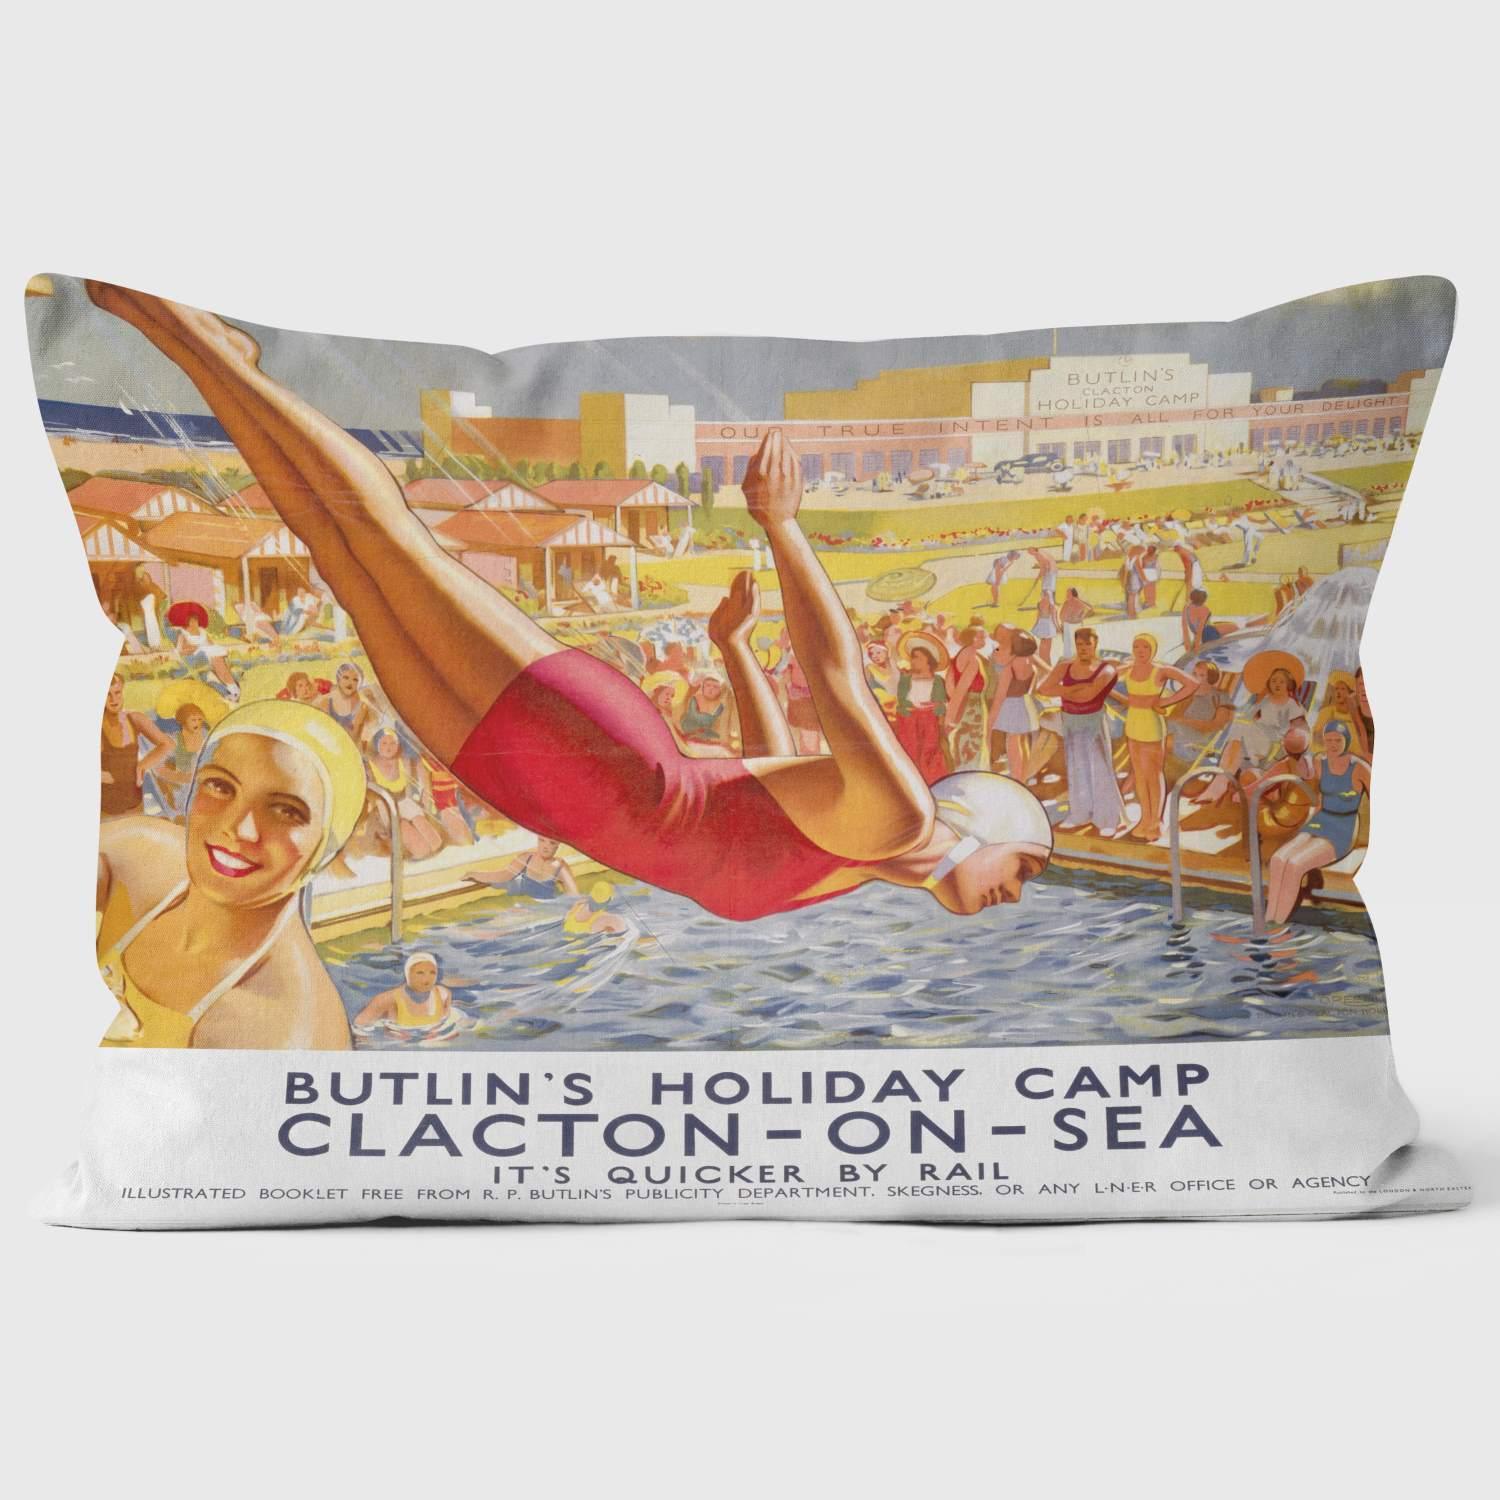 Butlin's Holiday Camp Clacton-On-Sea LNER 1940 - National Railway Museum Cushion - Handmade Cushions UK - WeLoveCushions